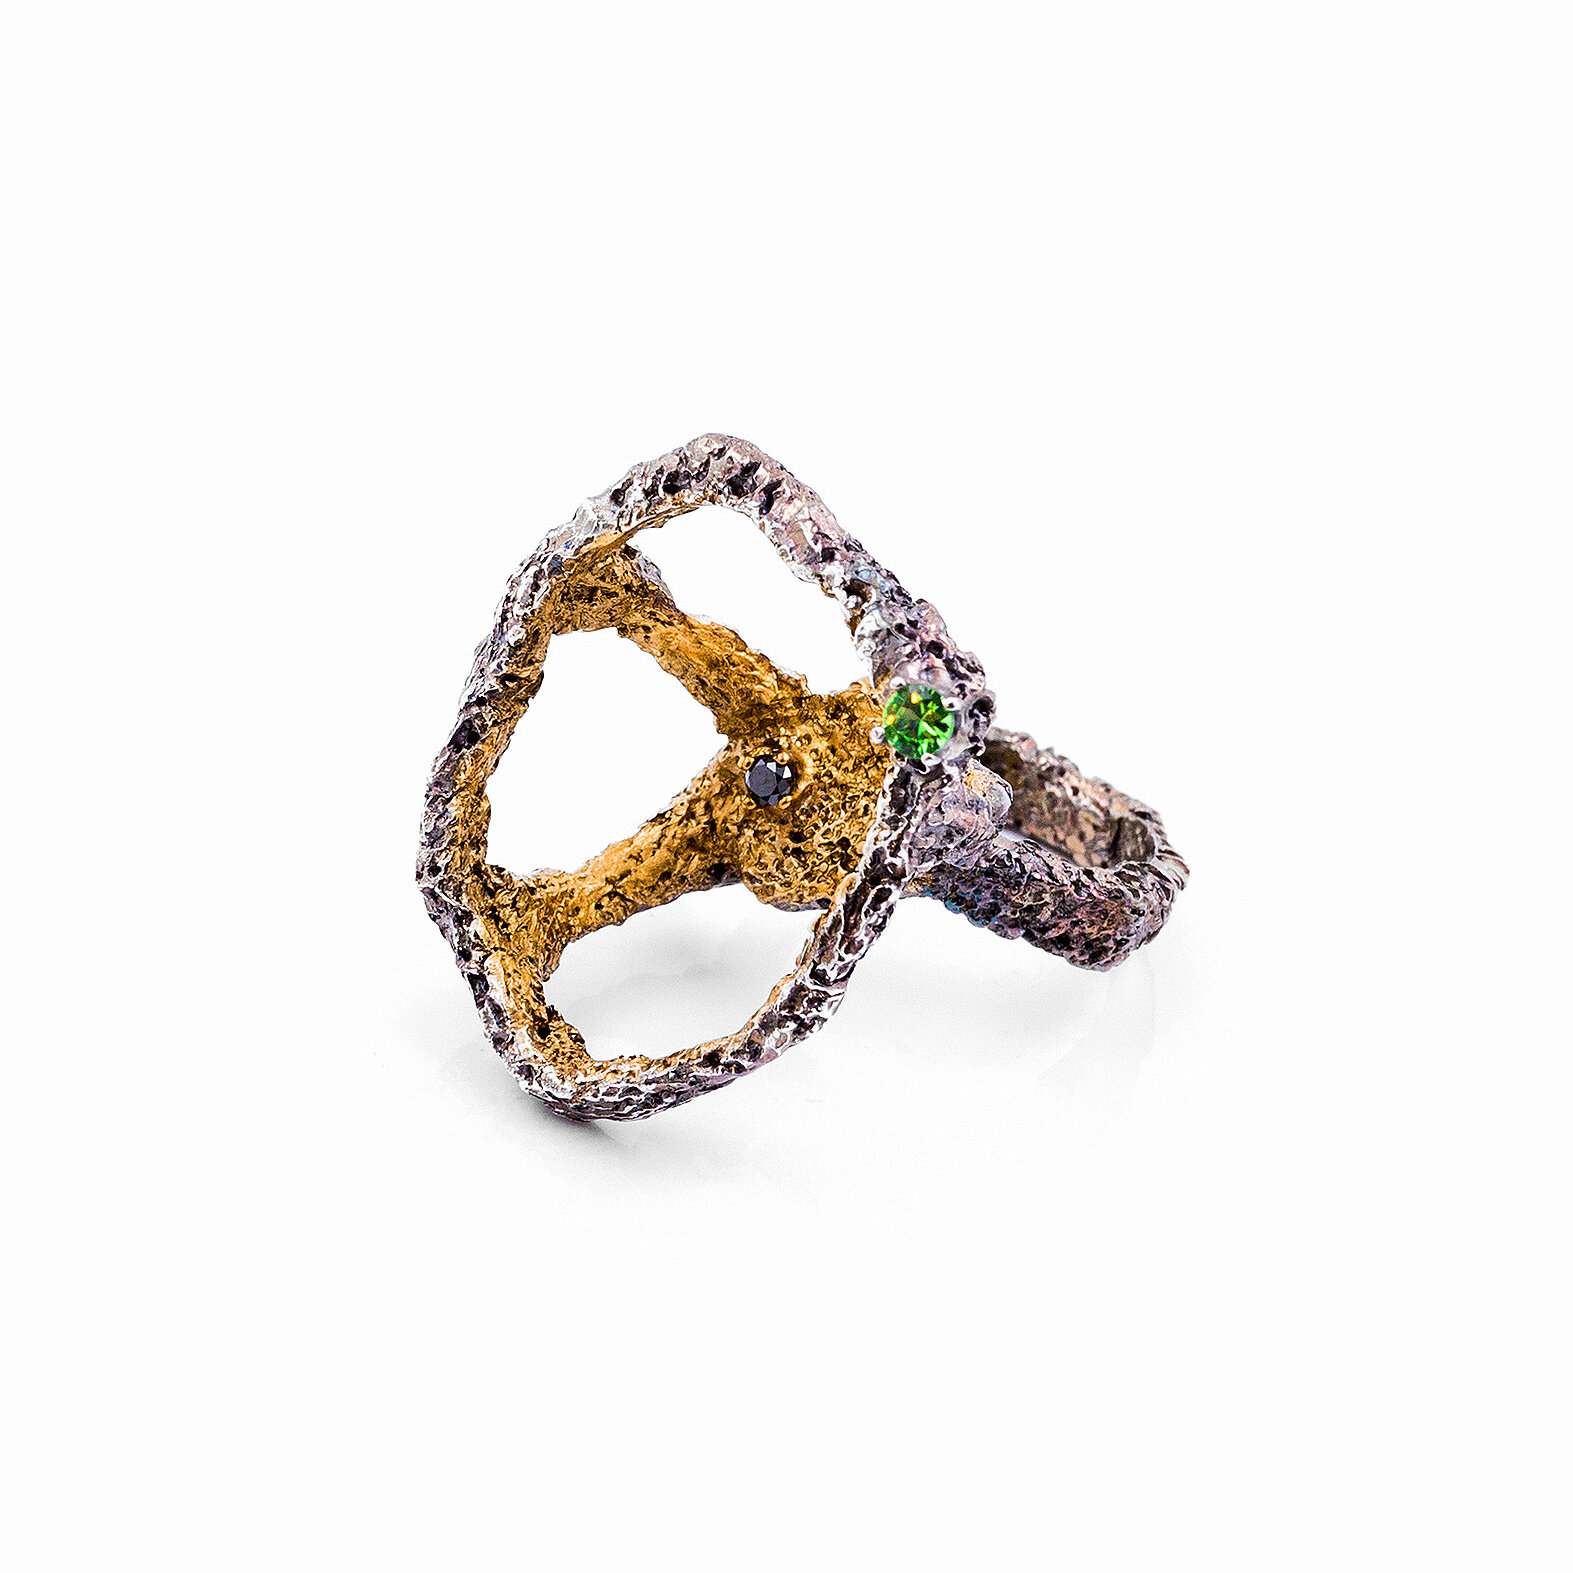 Open Fragment Ring | Sterling Silver, black diamond, tsavorite, gold vermeil, patina.